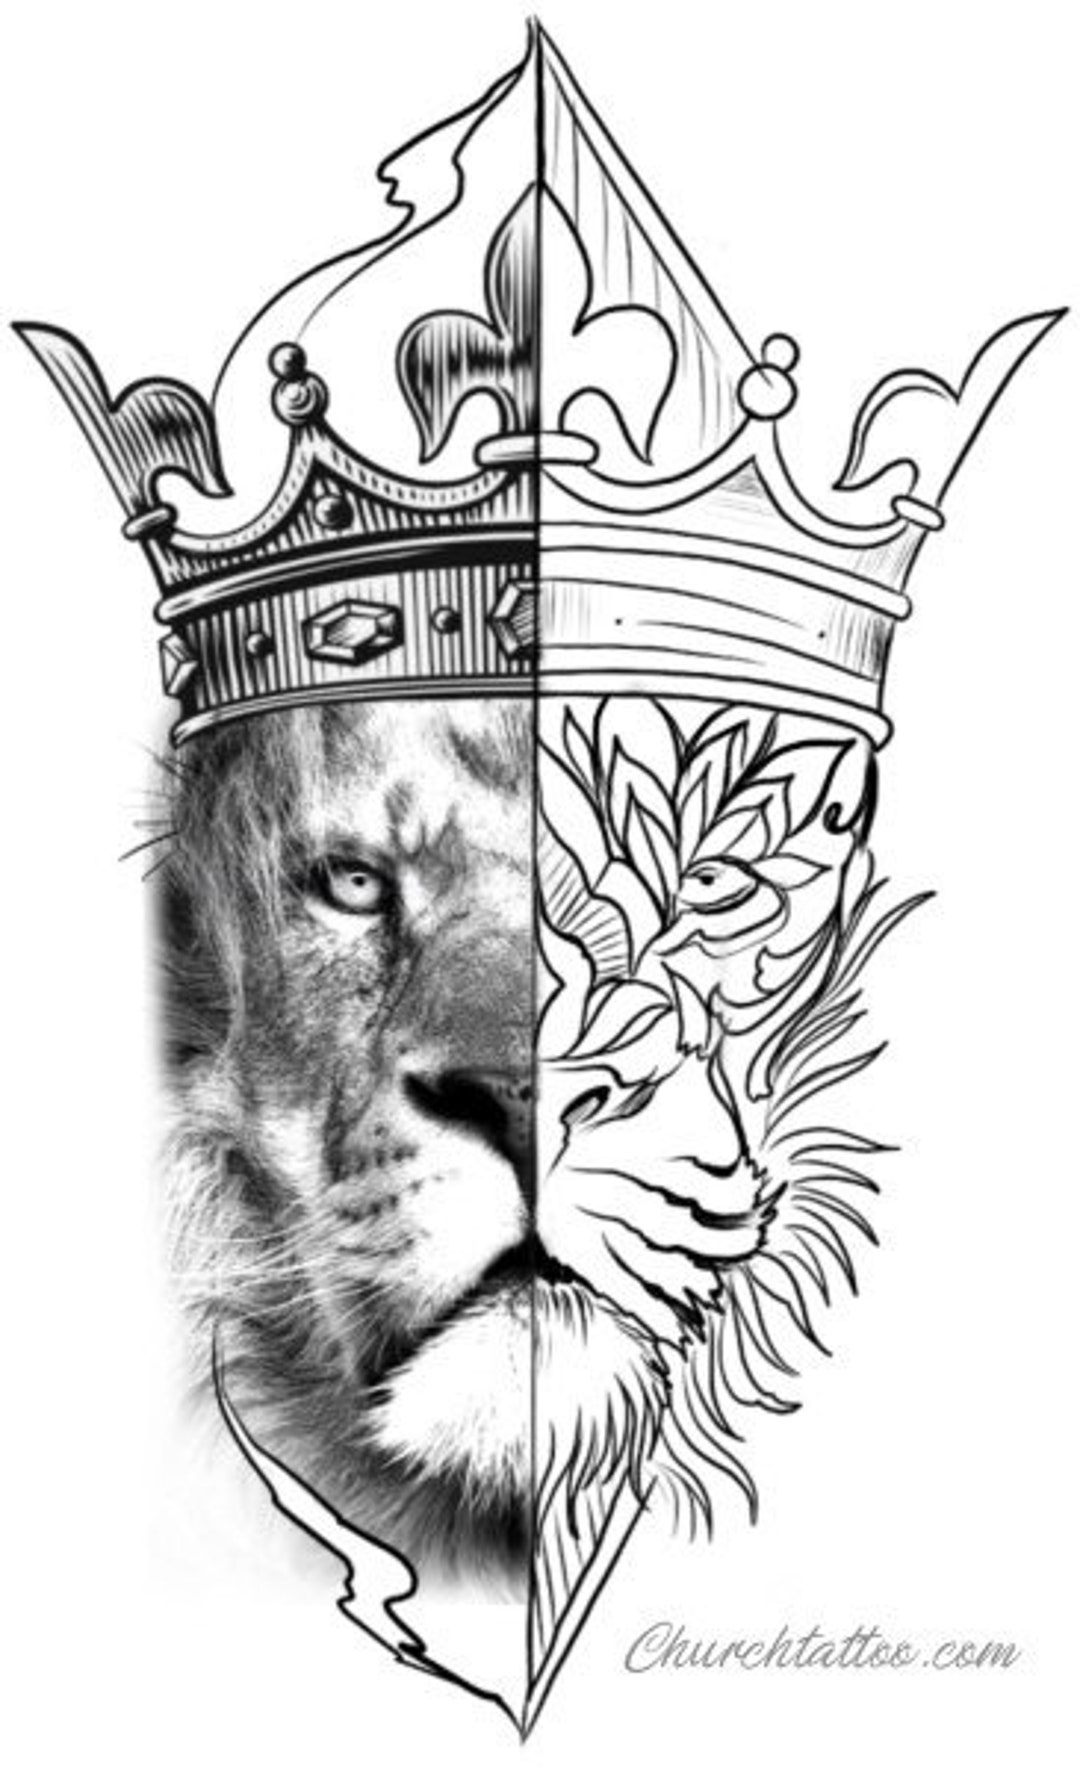 48967 Lion Tattoo Design Images Stock Photos  Vectors  Shutterstock